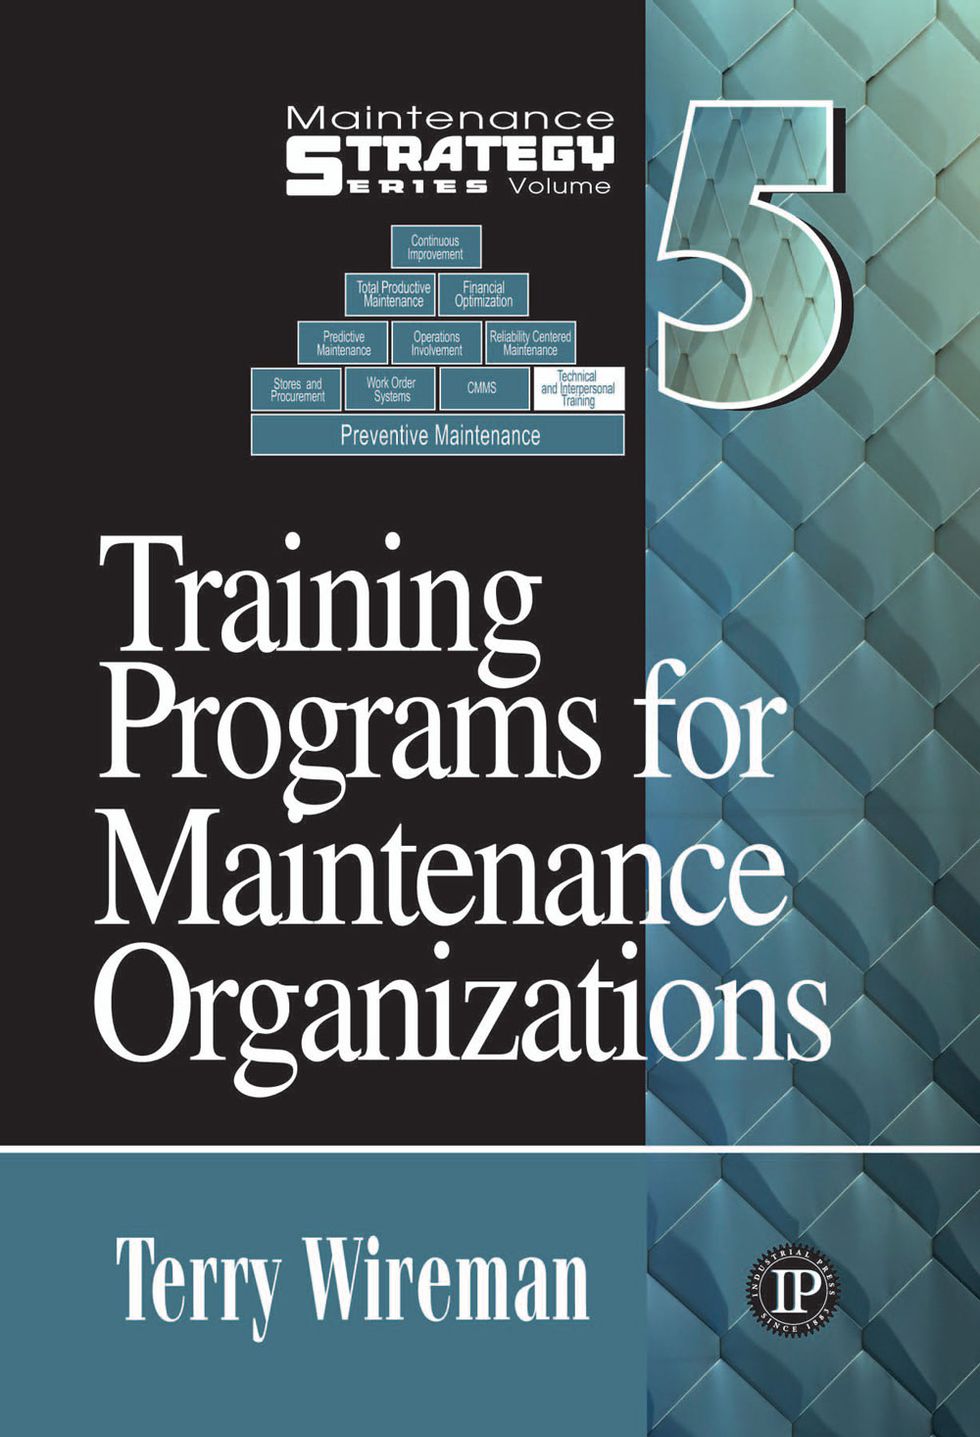  Maintenance Strategy Series Volume 5 - Training Programs for Maintenance Organizations 